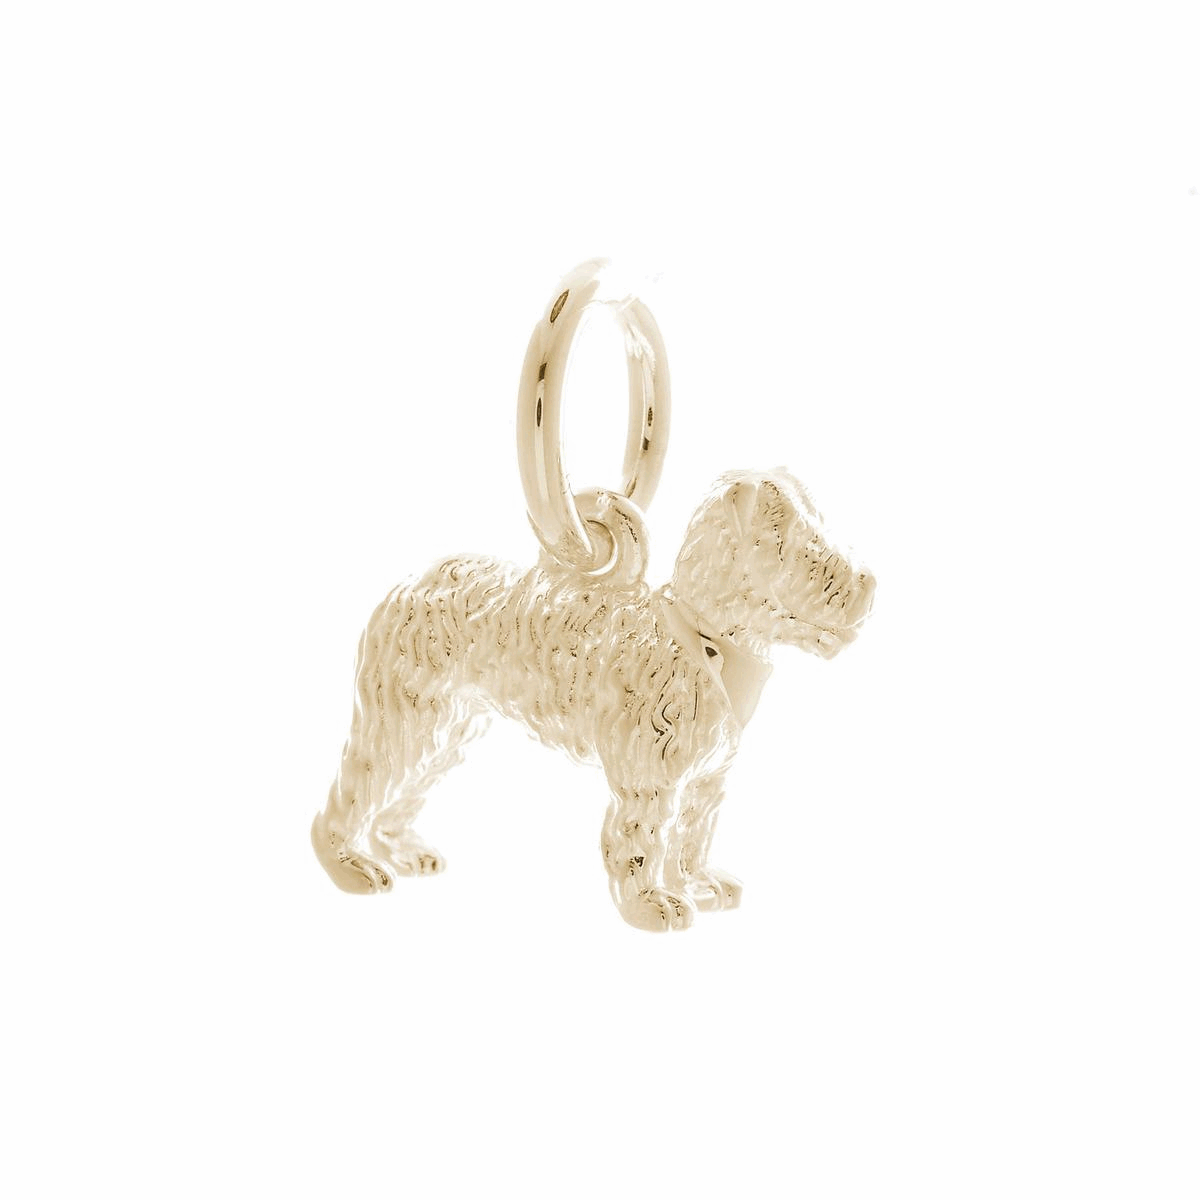 Solid gold fox terrier charm scarlett jewellery Brighton UK gold dog charms for bracelets